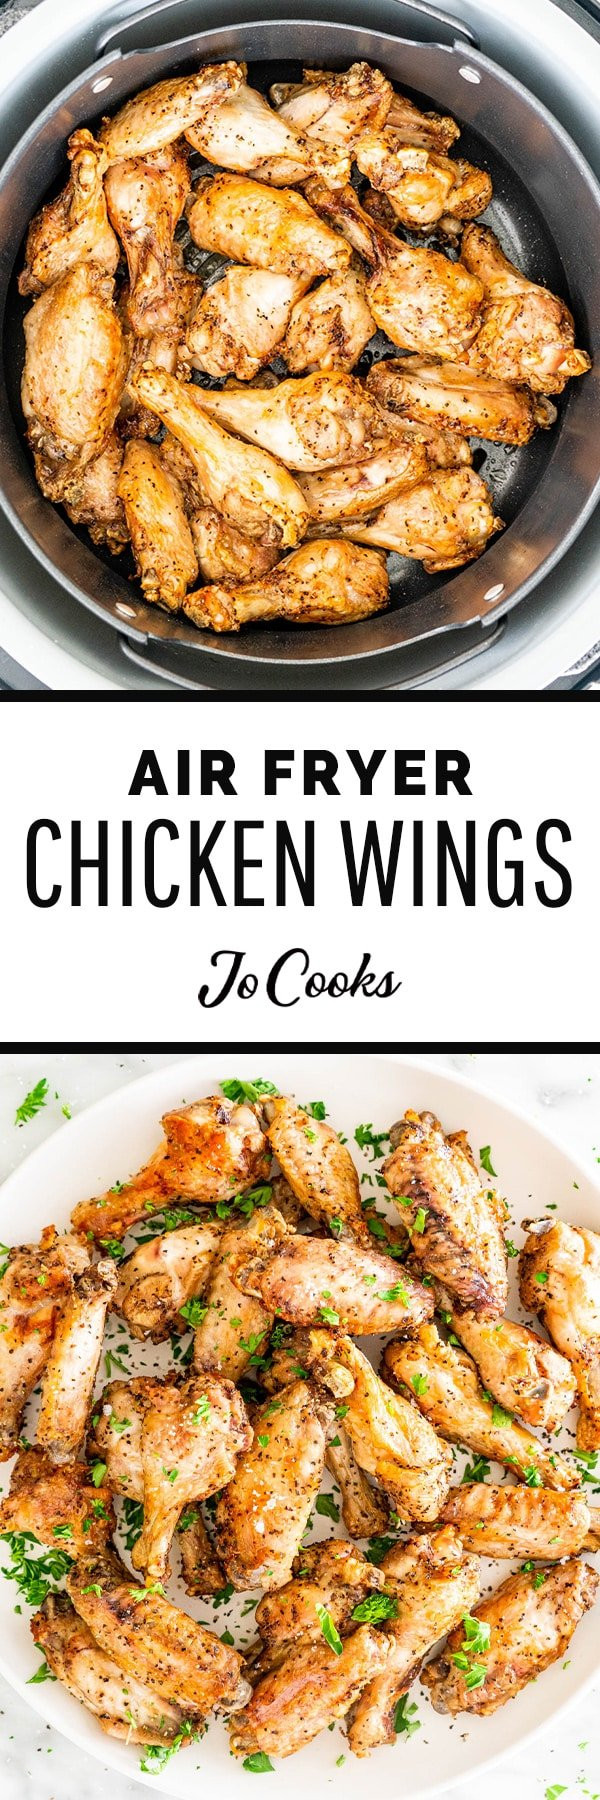 Air Fryer Chicken Wings Cook Time
 Air Fryer Chicken Wings Jo Cooks